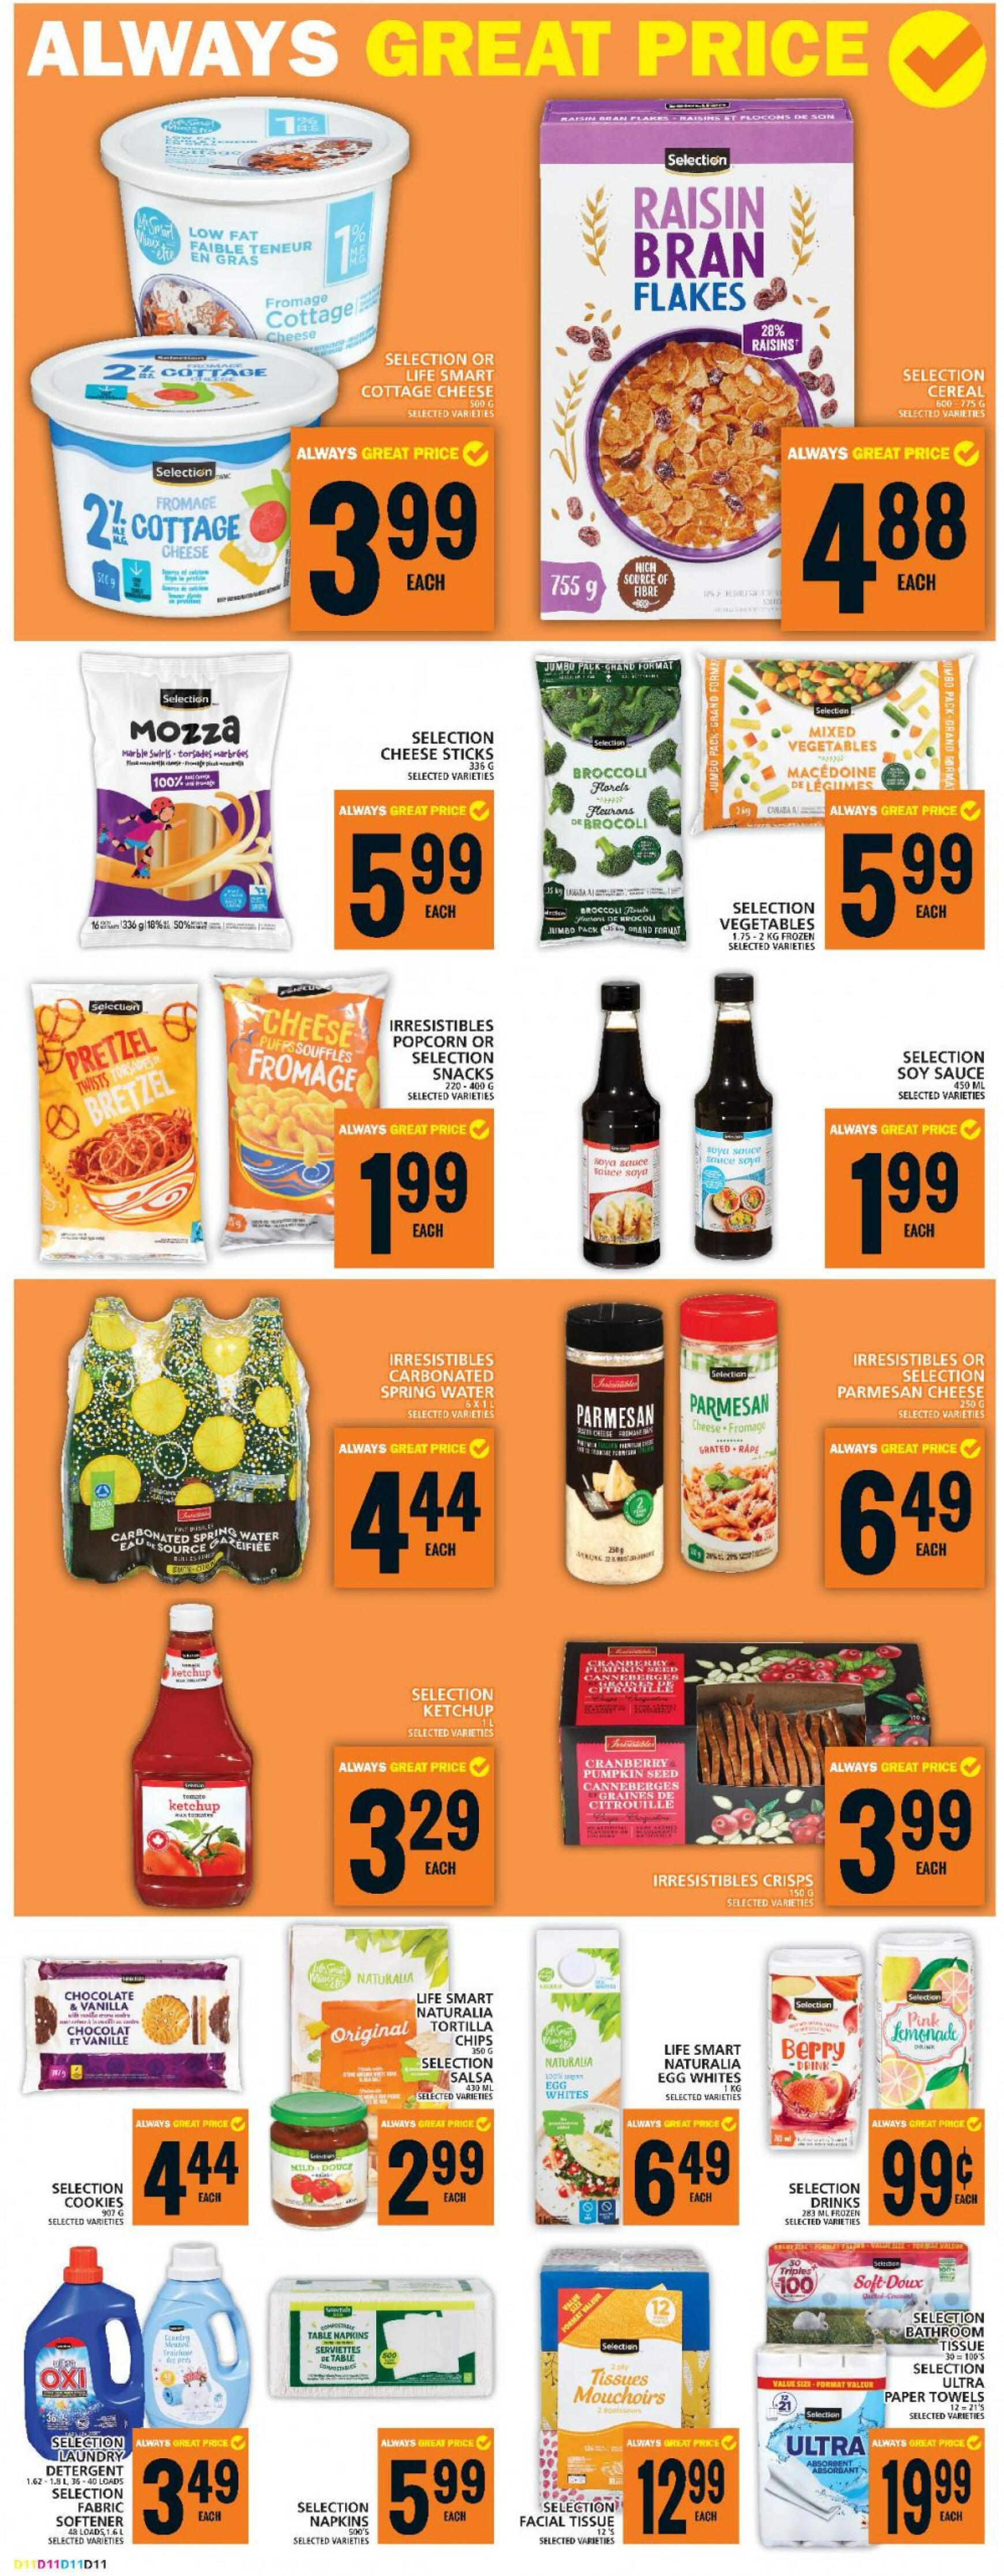 food-basics - Food Basics flyer current 25.04. - 01.05. - page: 12